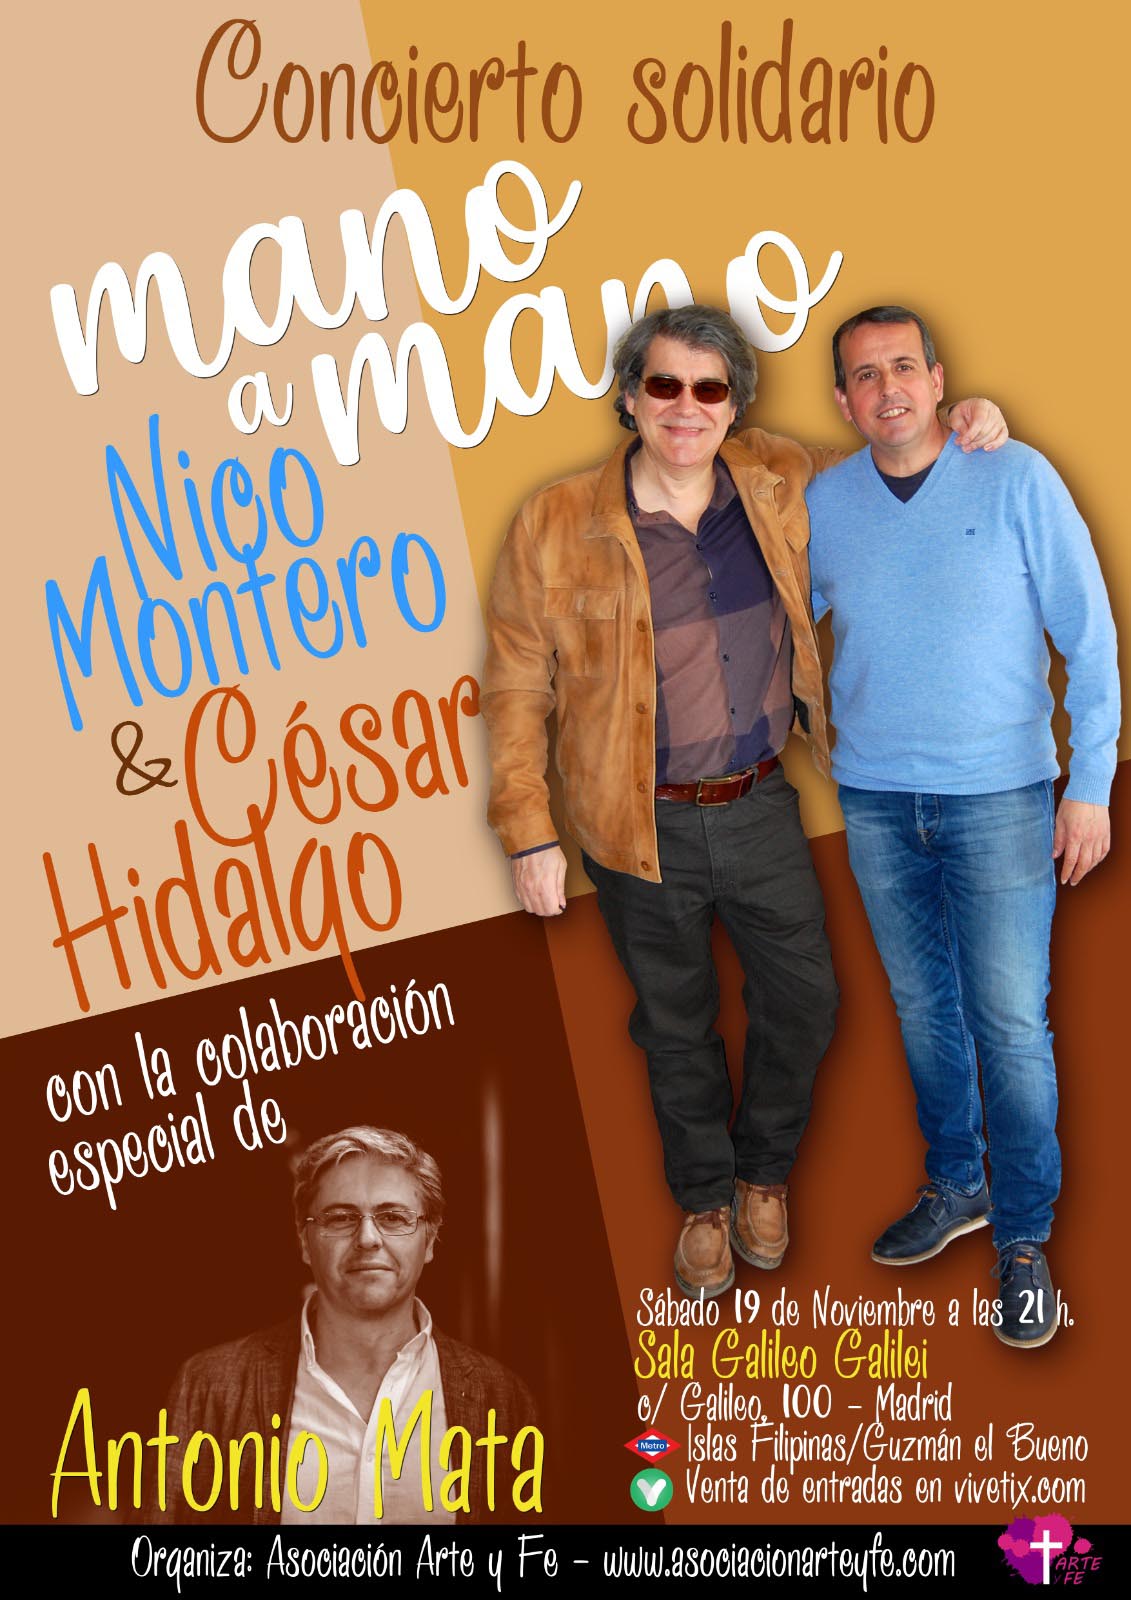 Nico Montero & Cesar Vidal asociacion arte y fe